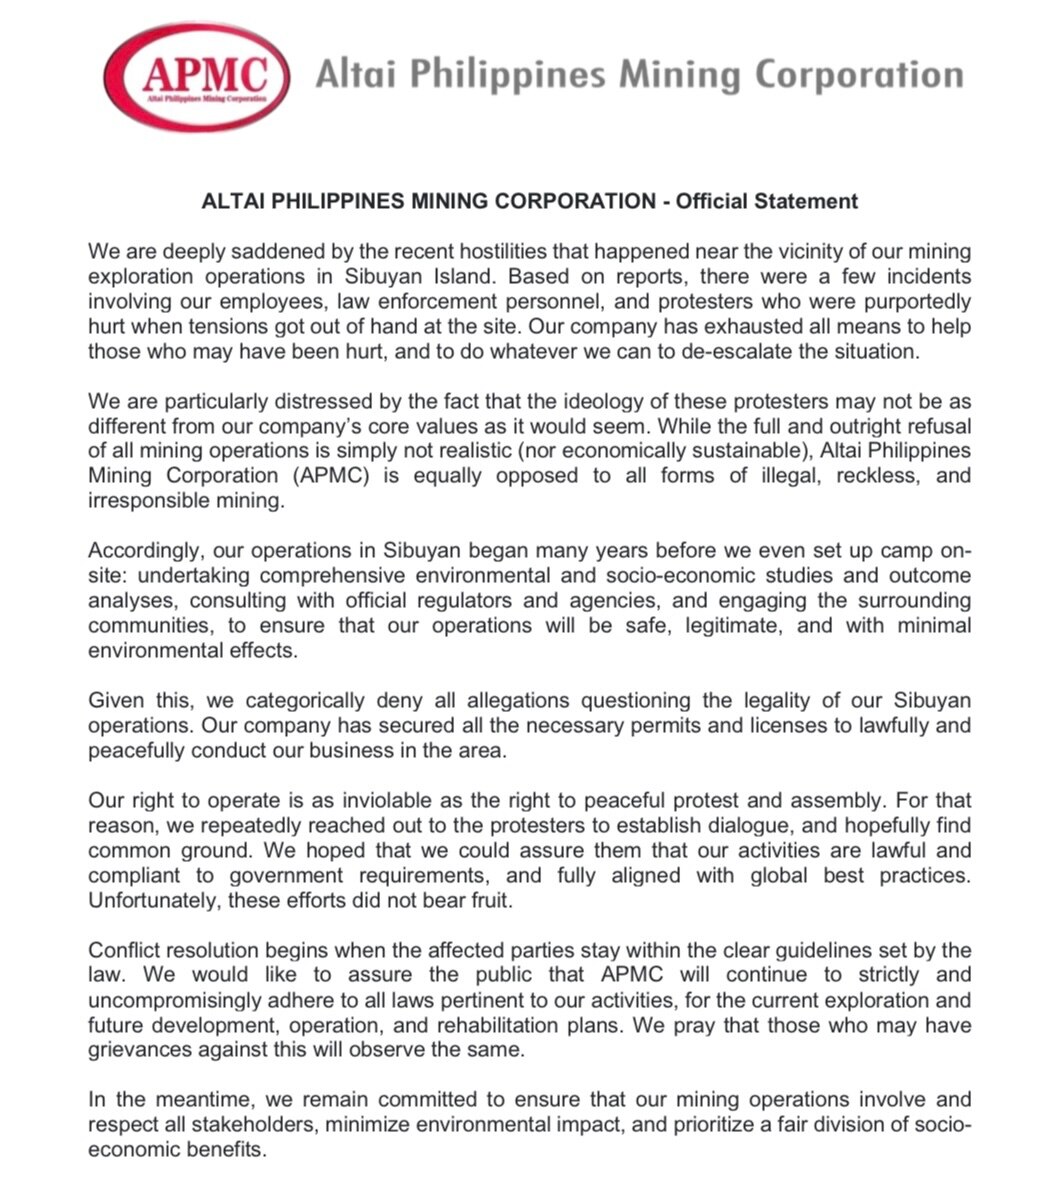 Altai mining firm says 'voluntarily' halting exploration, testing activities in Sibuyan